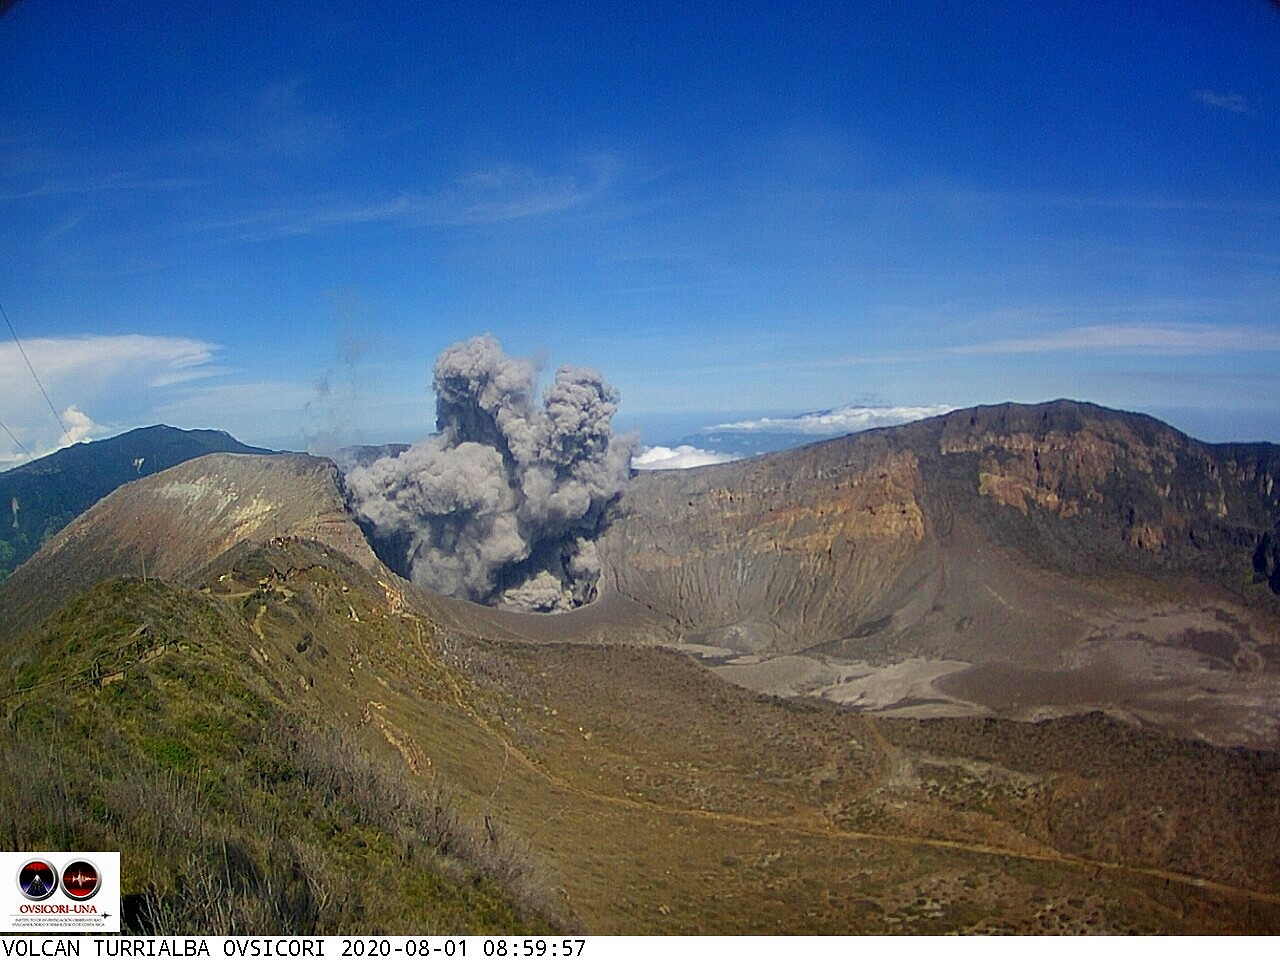 Eruption from Turrialba volcano on 1 August (image: OVSICORI)